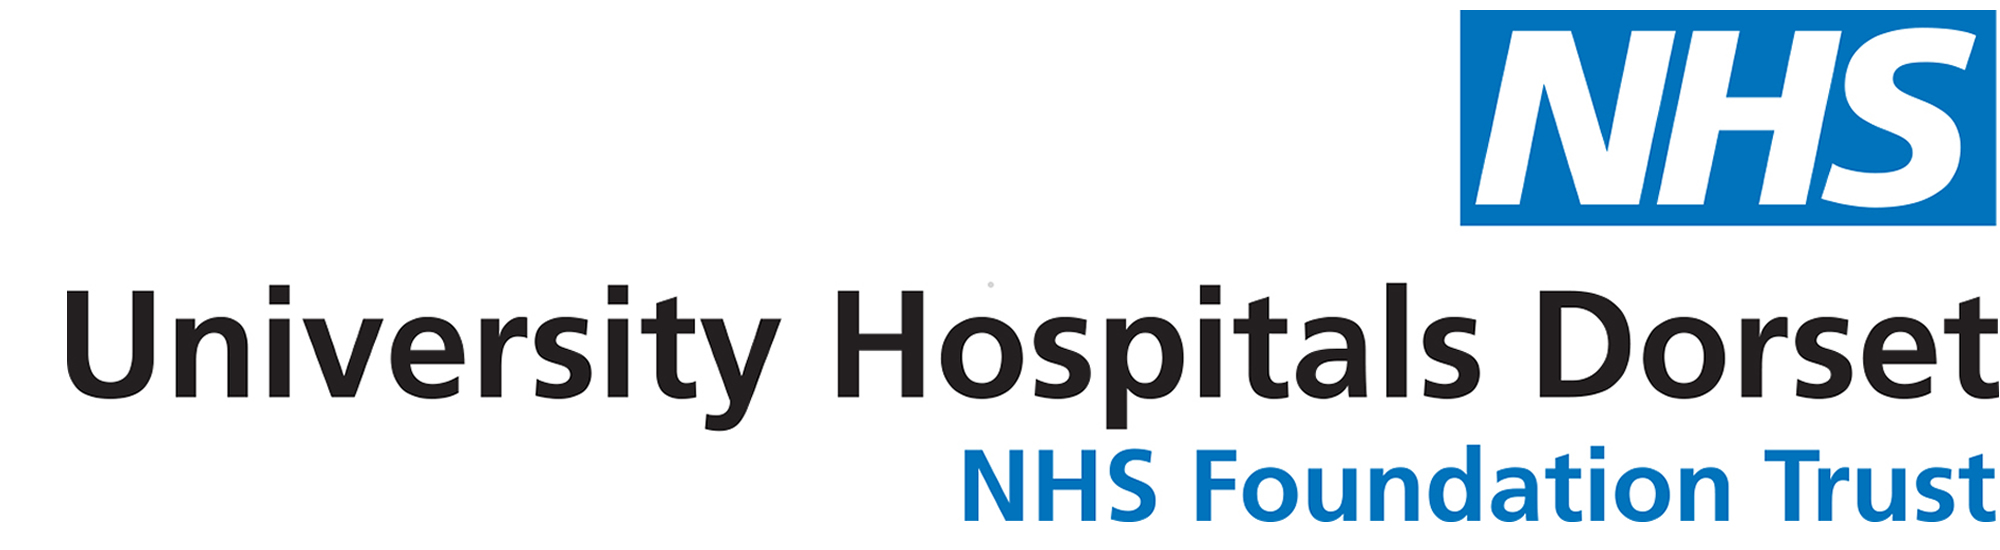 University Hospitals Dorset NHS Foundation Trust